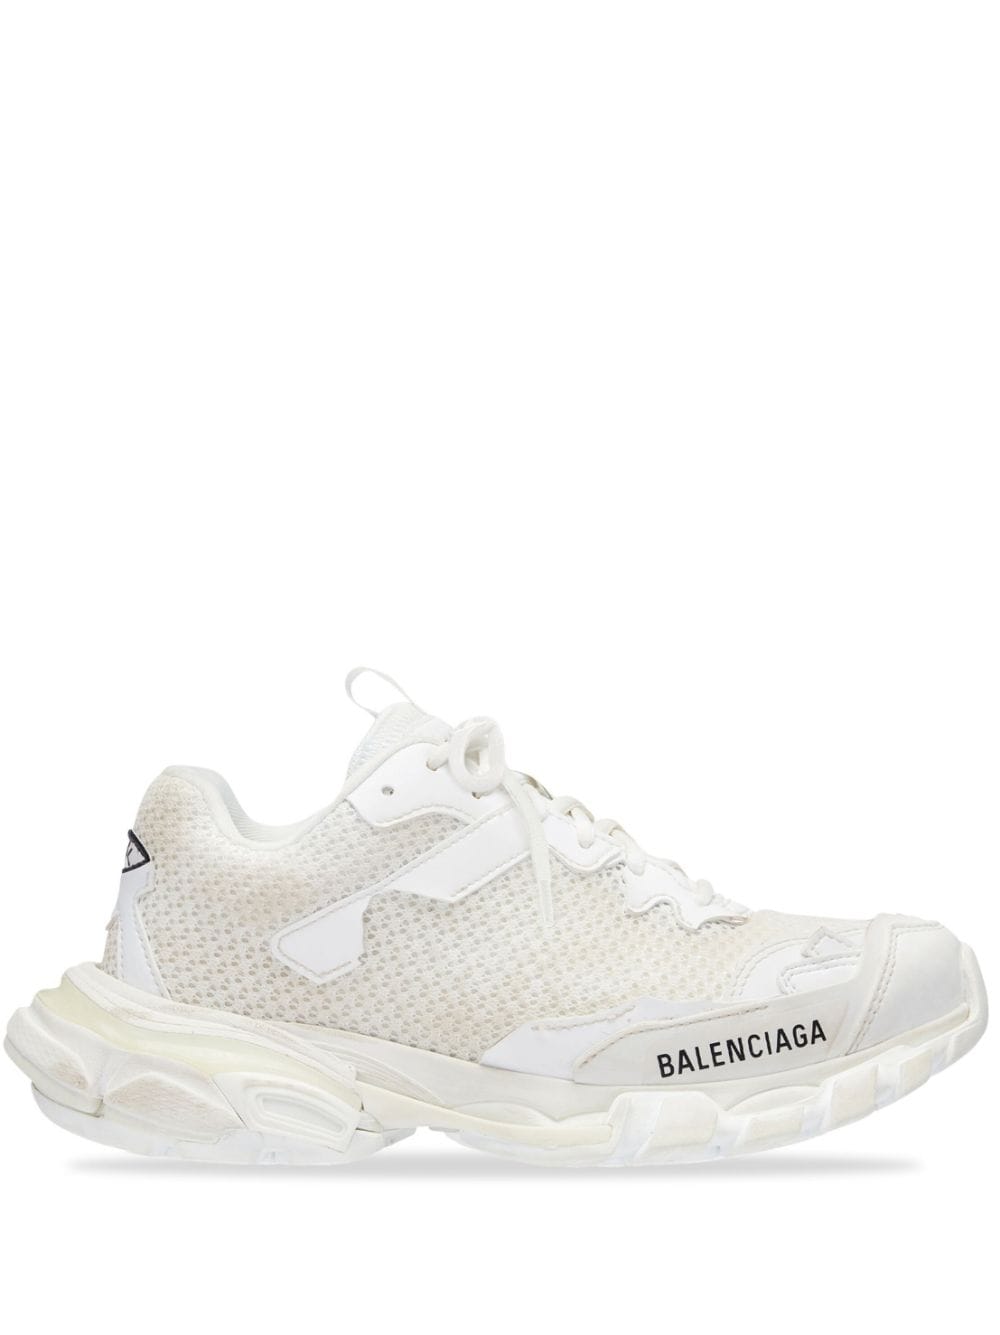 Image 1 of Balenciaga Track 3 sneakers